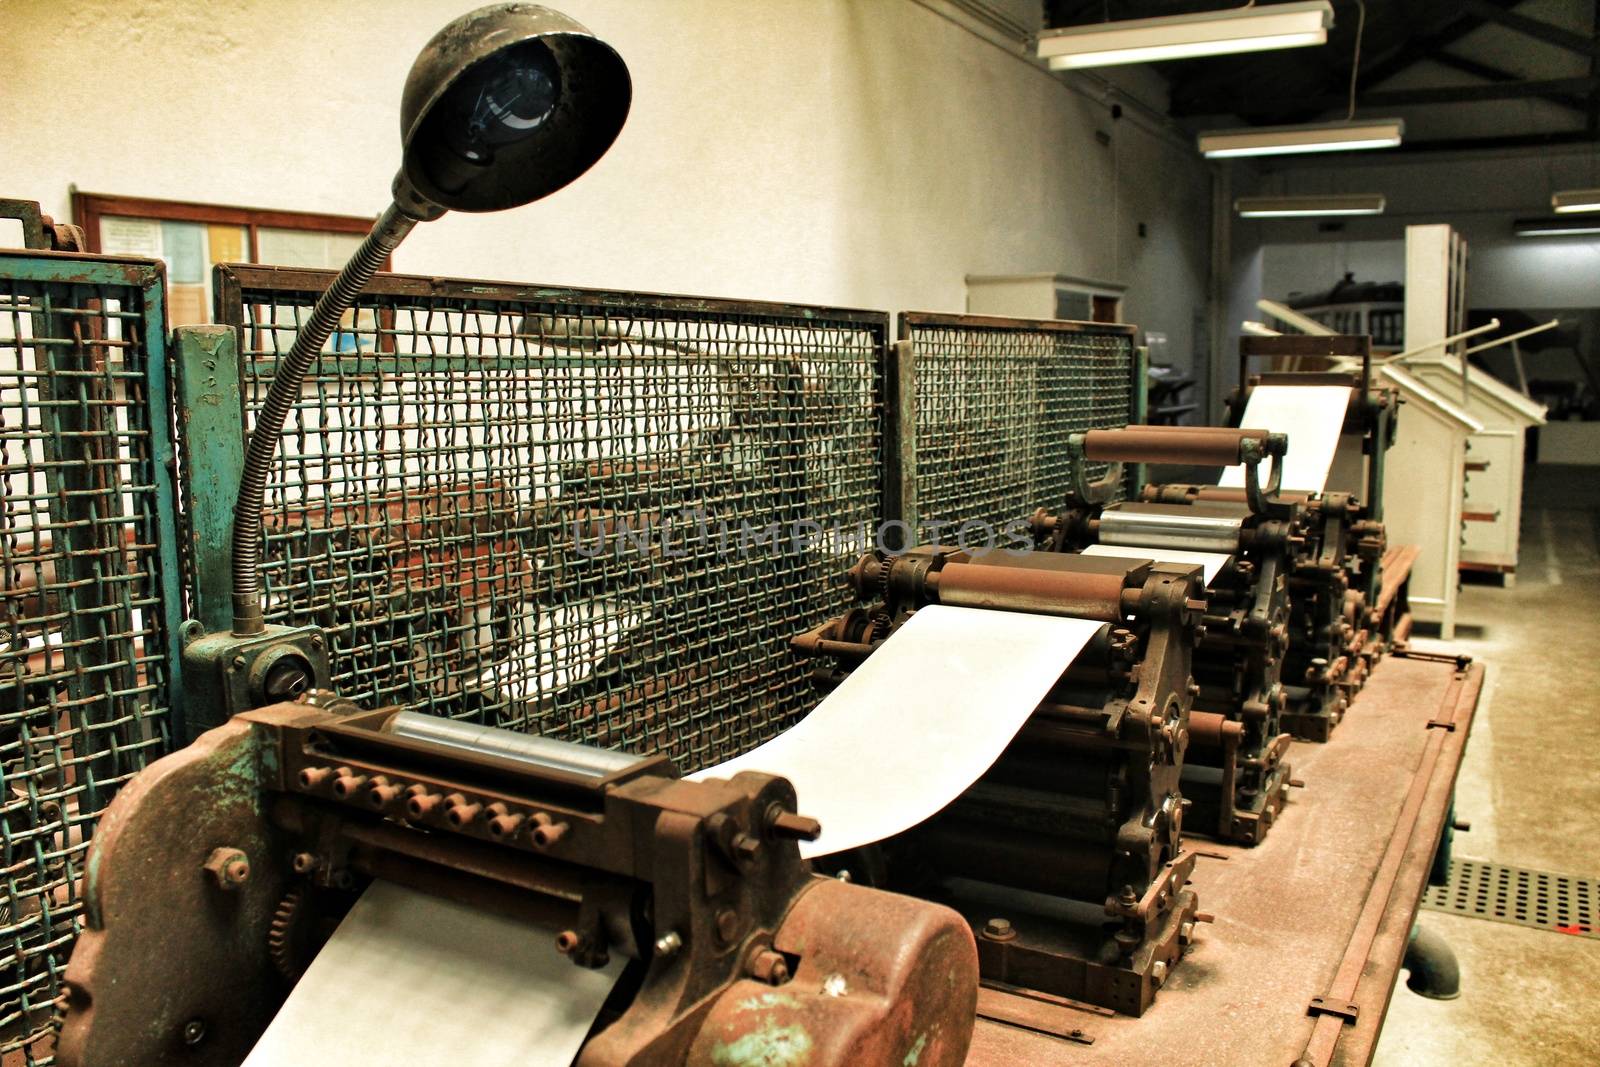 Old printing machine by soniabonet